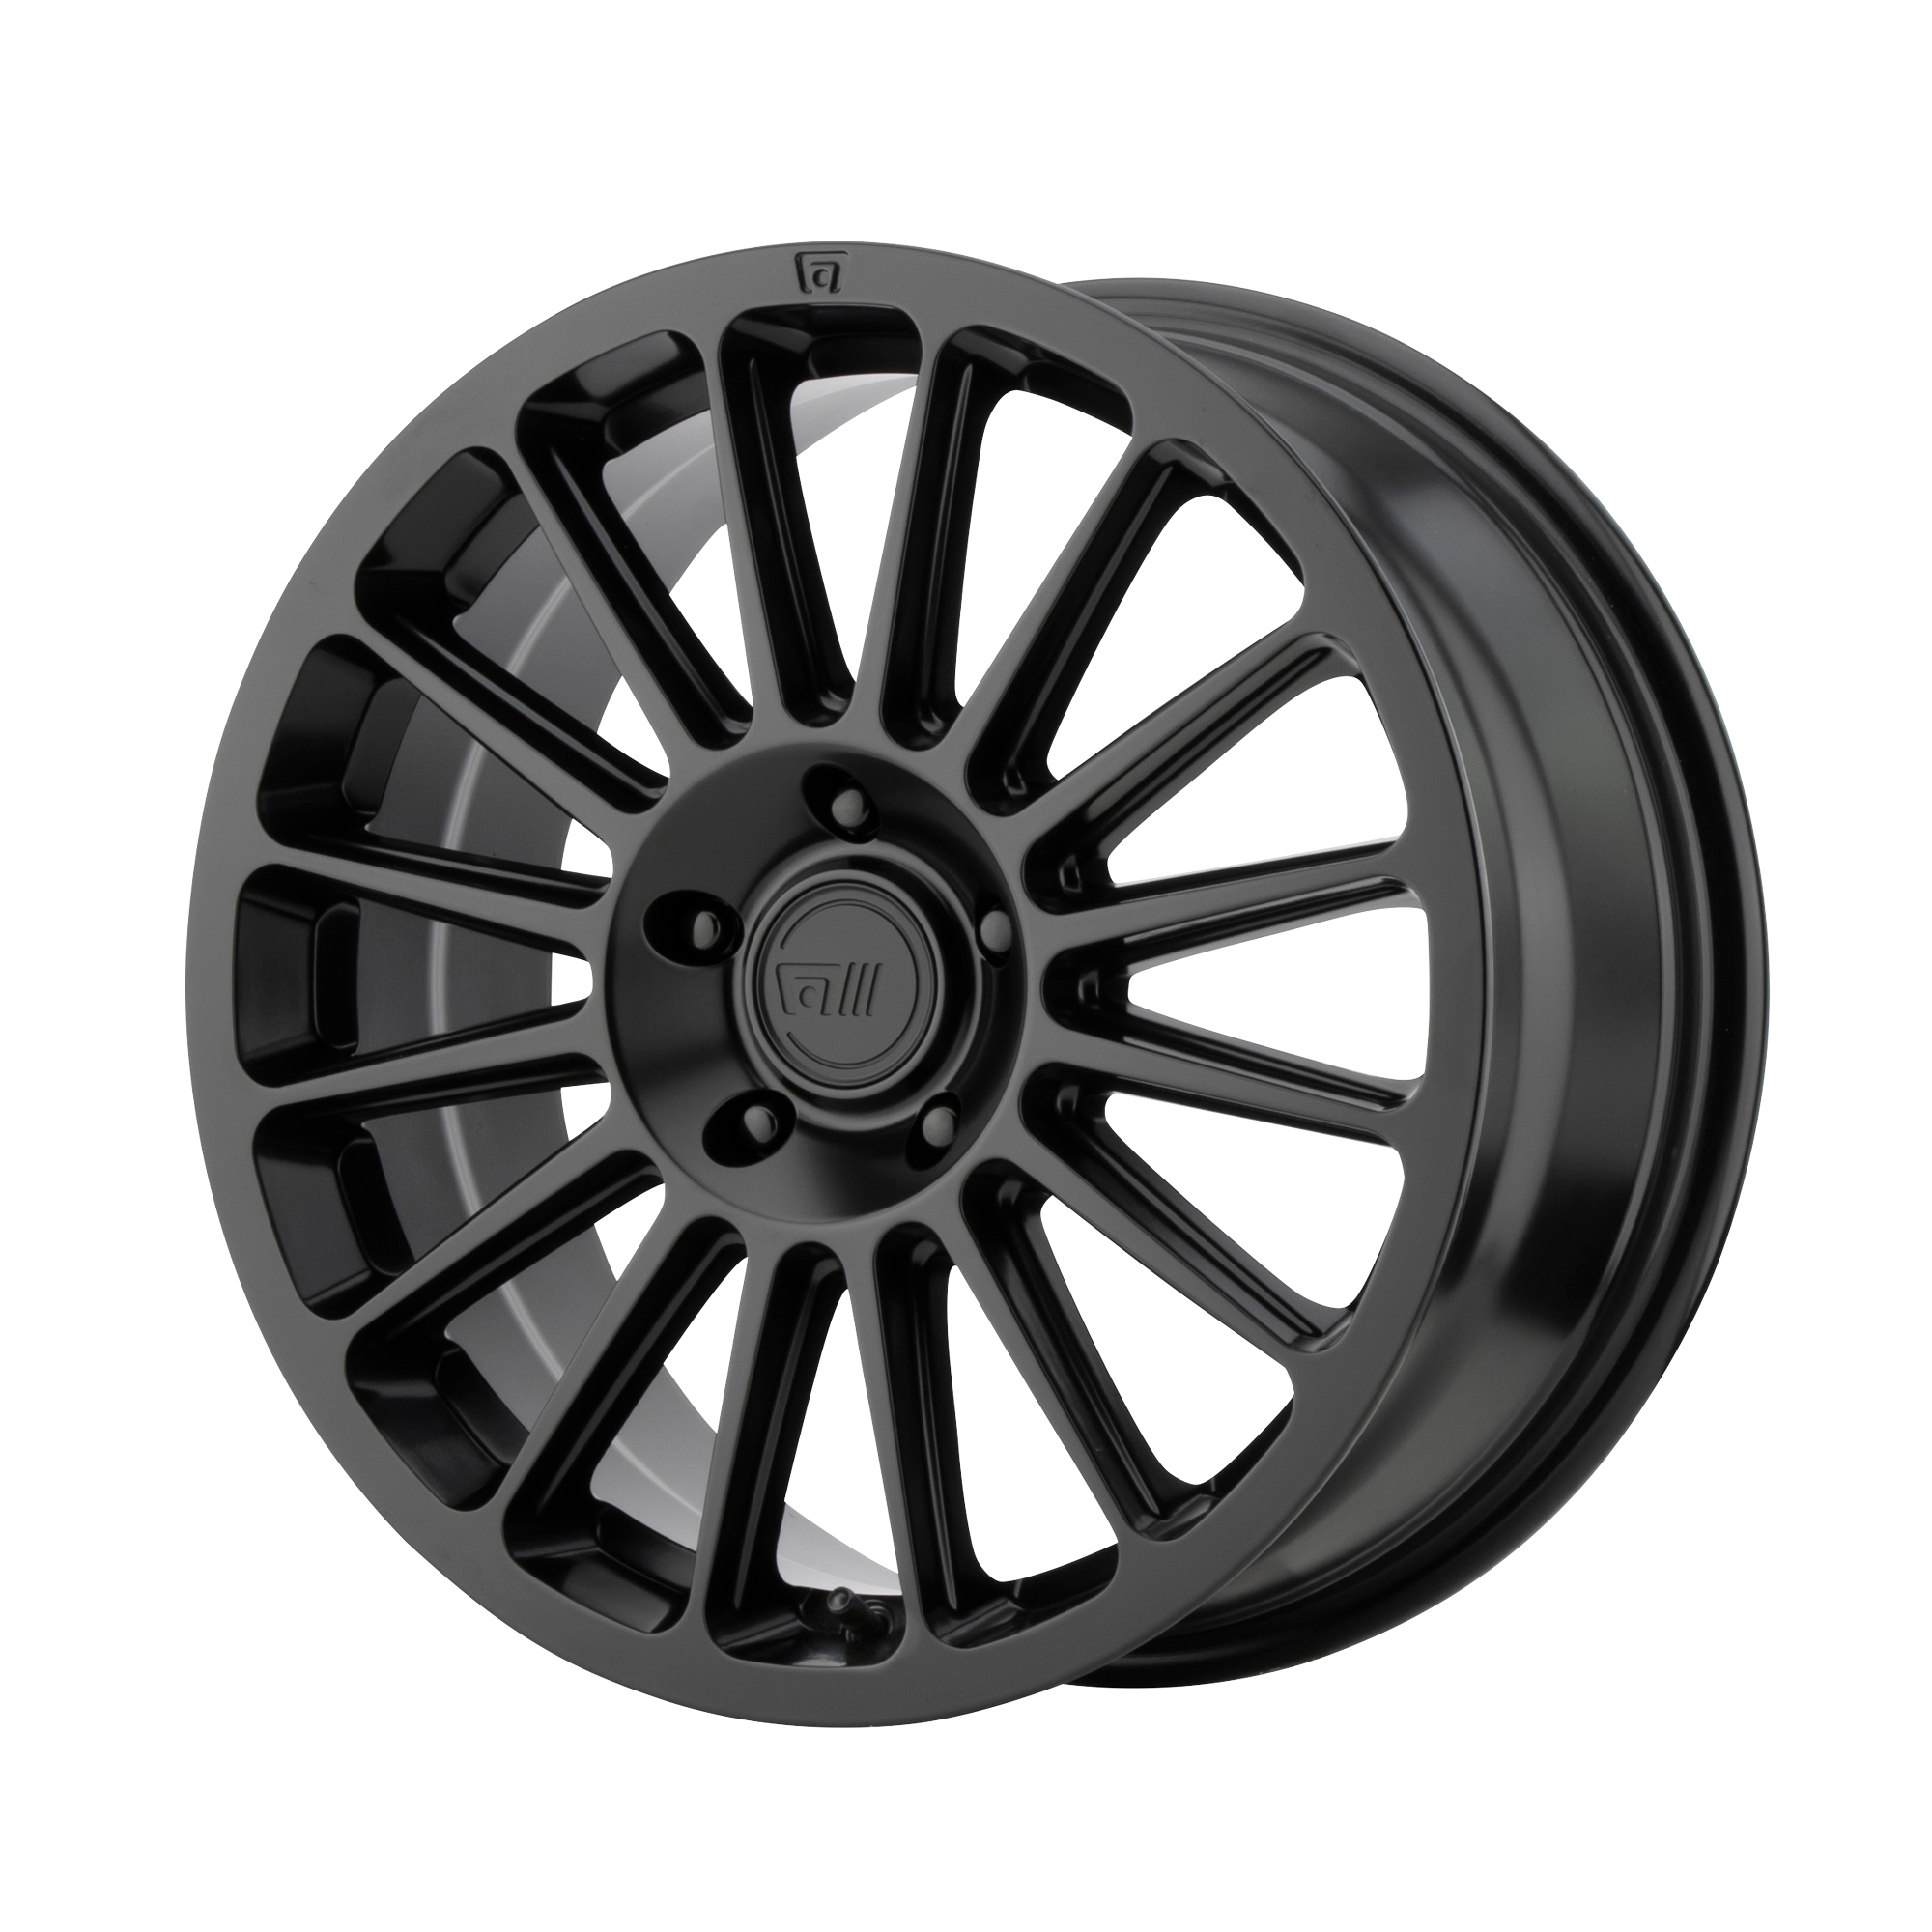 MR141 16x7.5 5x114.30 SATIN BLACK (40 mm) - Tires and Engine Performance